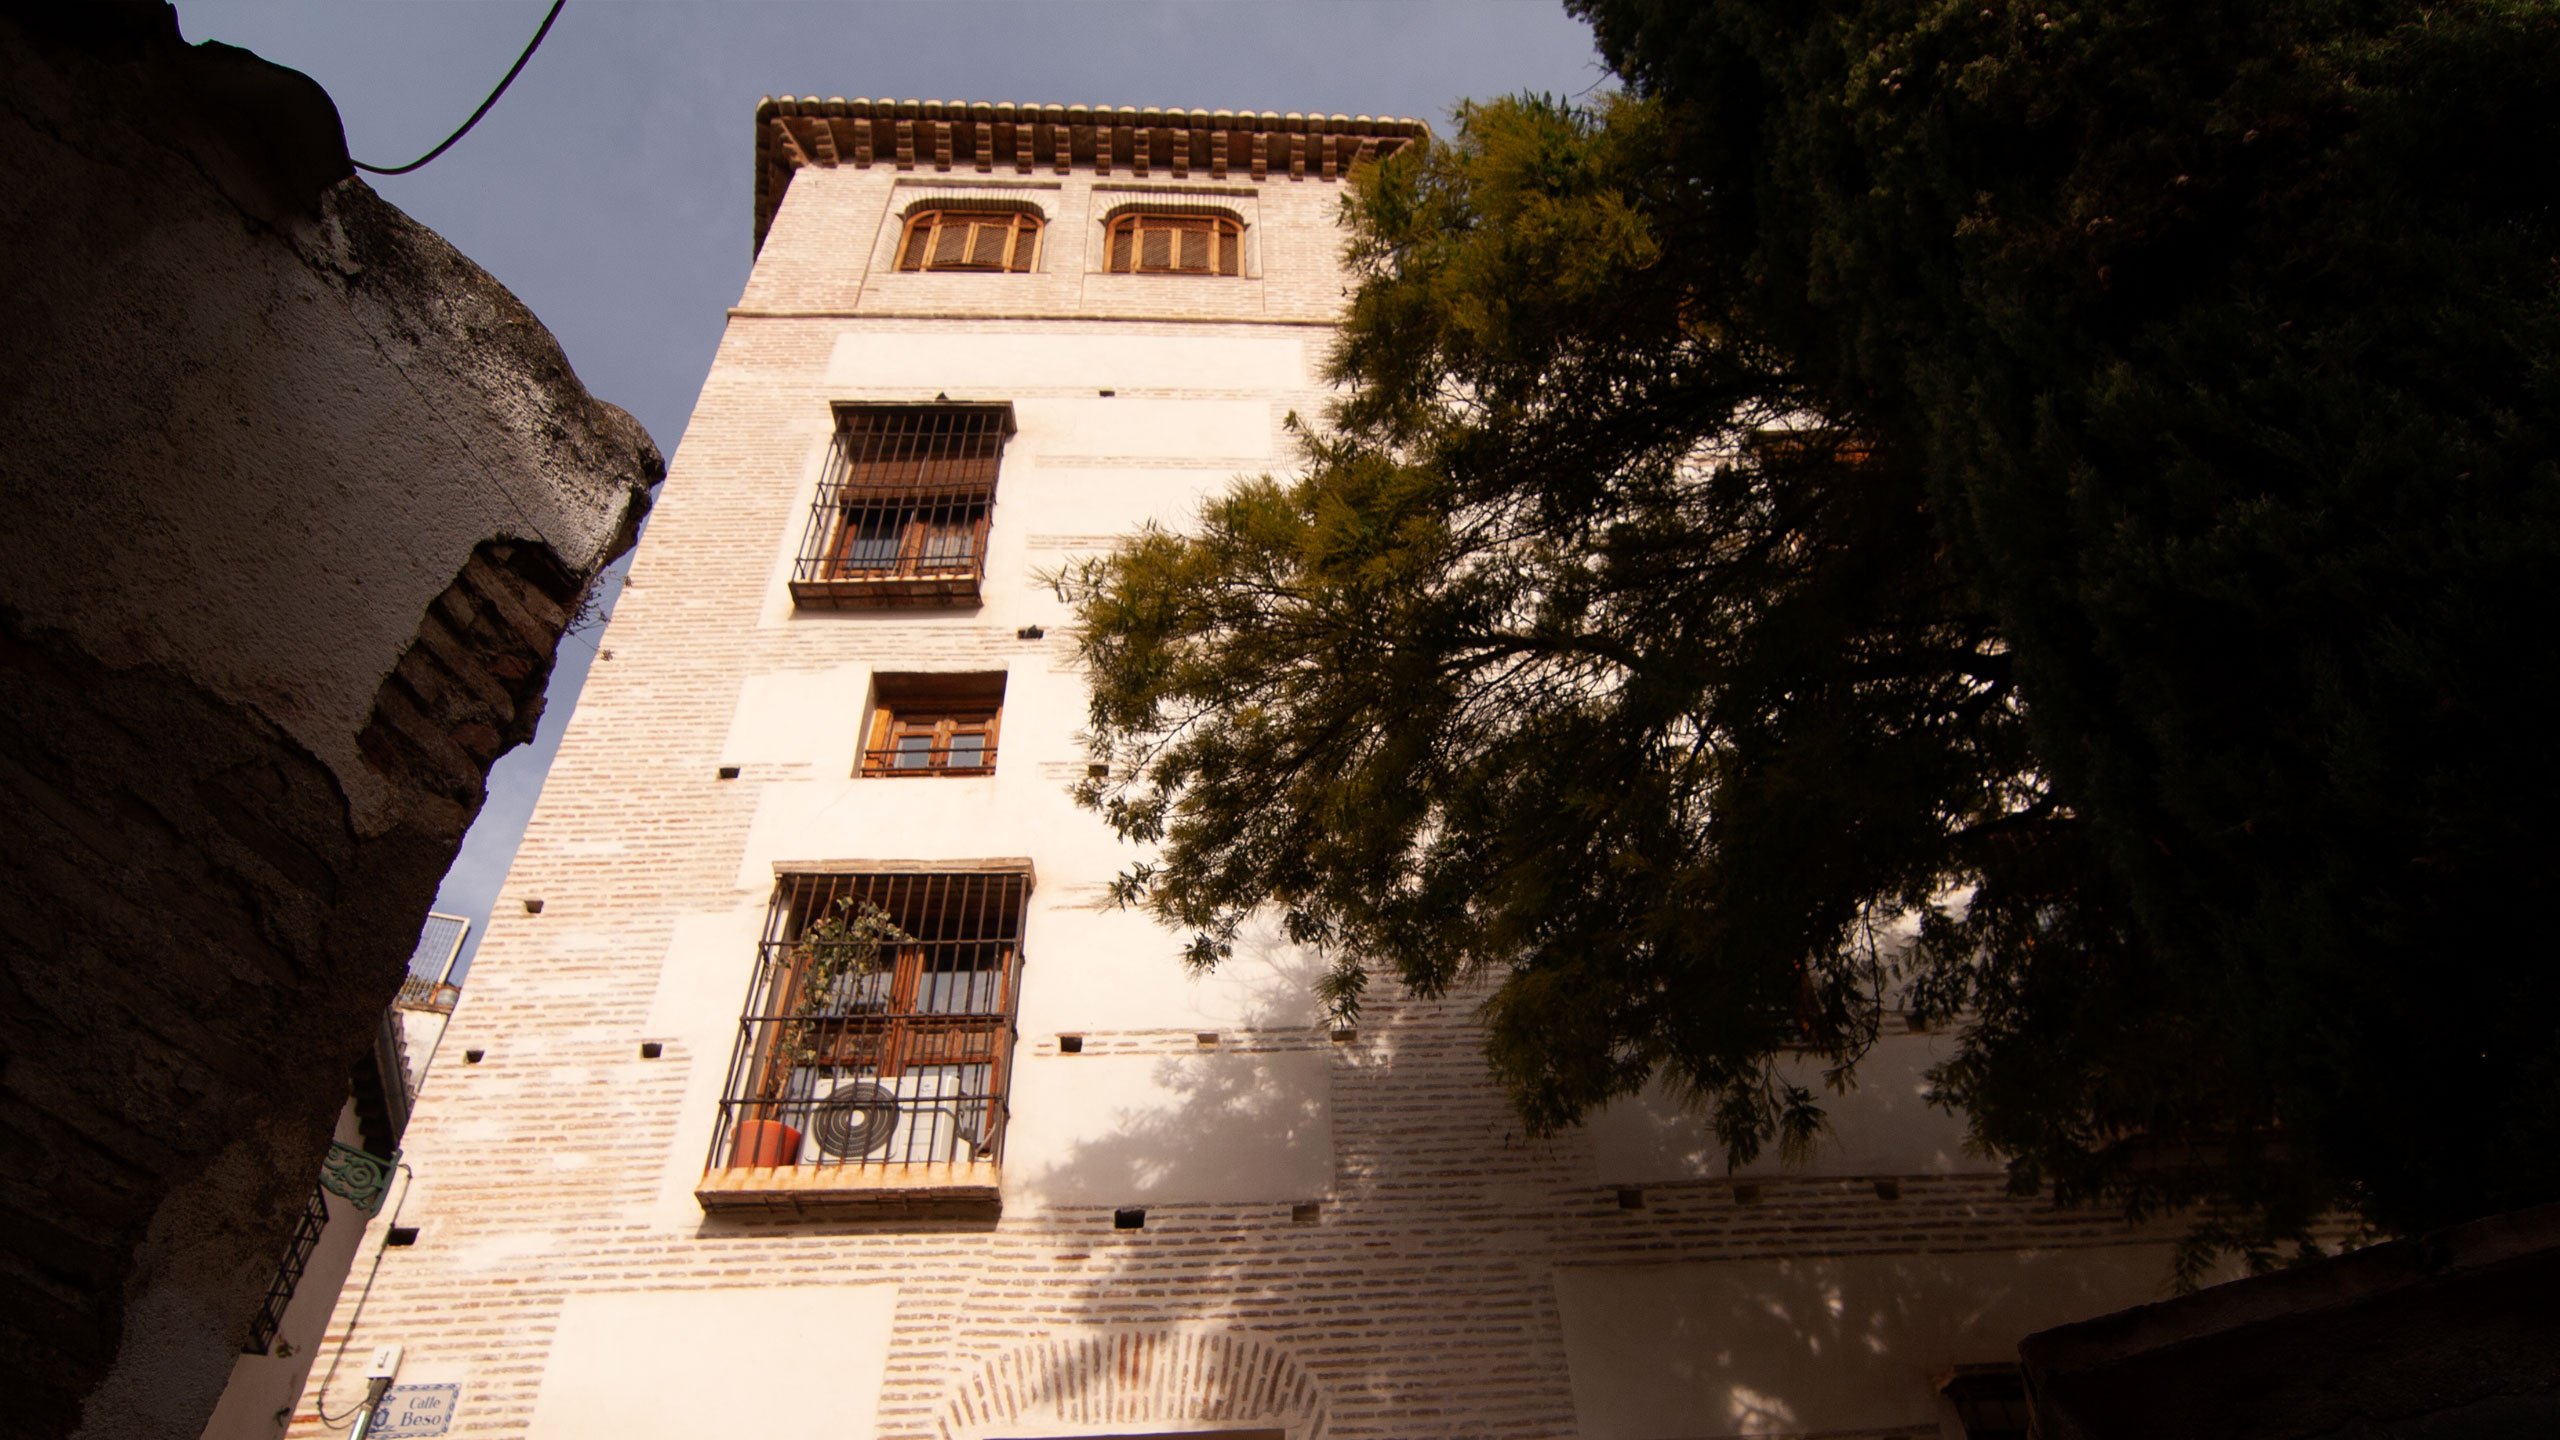 Particulier - Conde de Cabra Palace, De toren